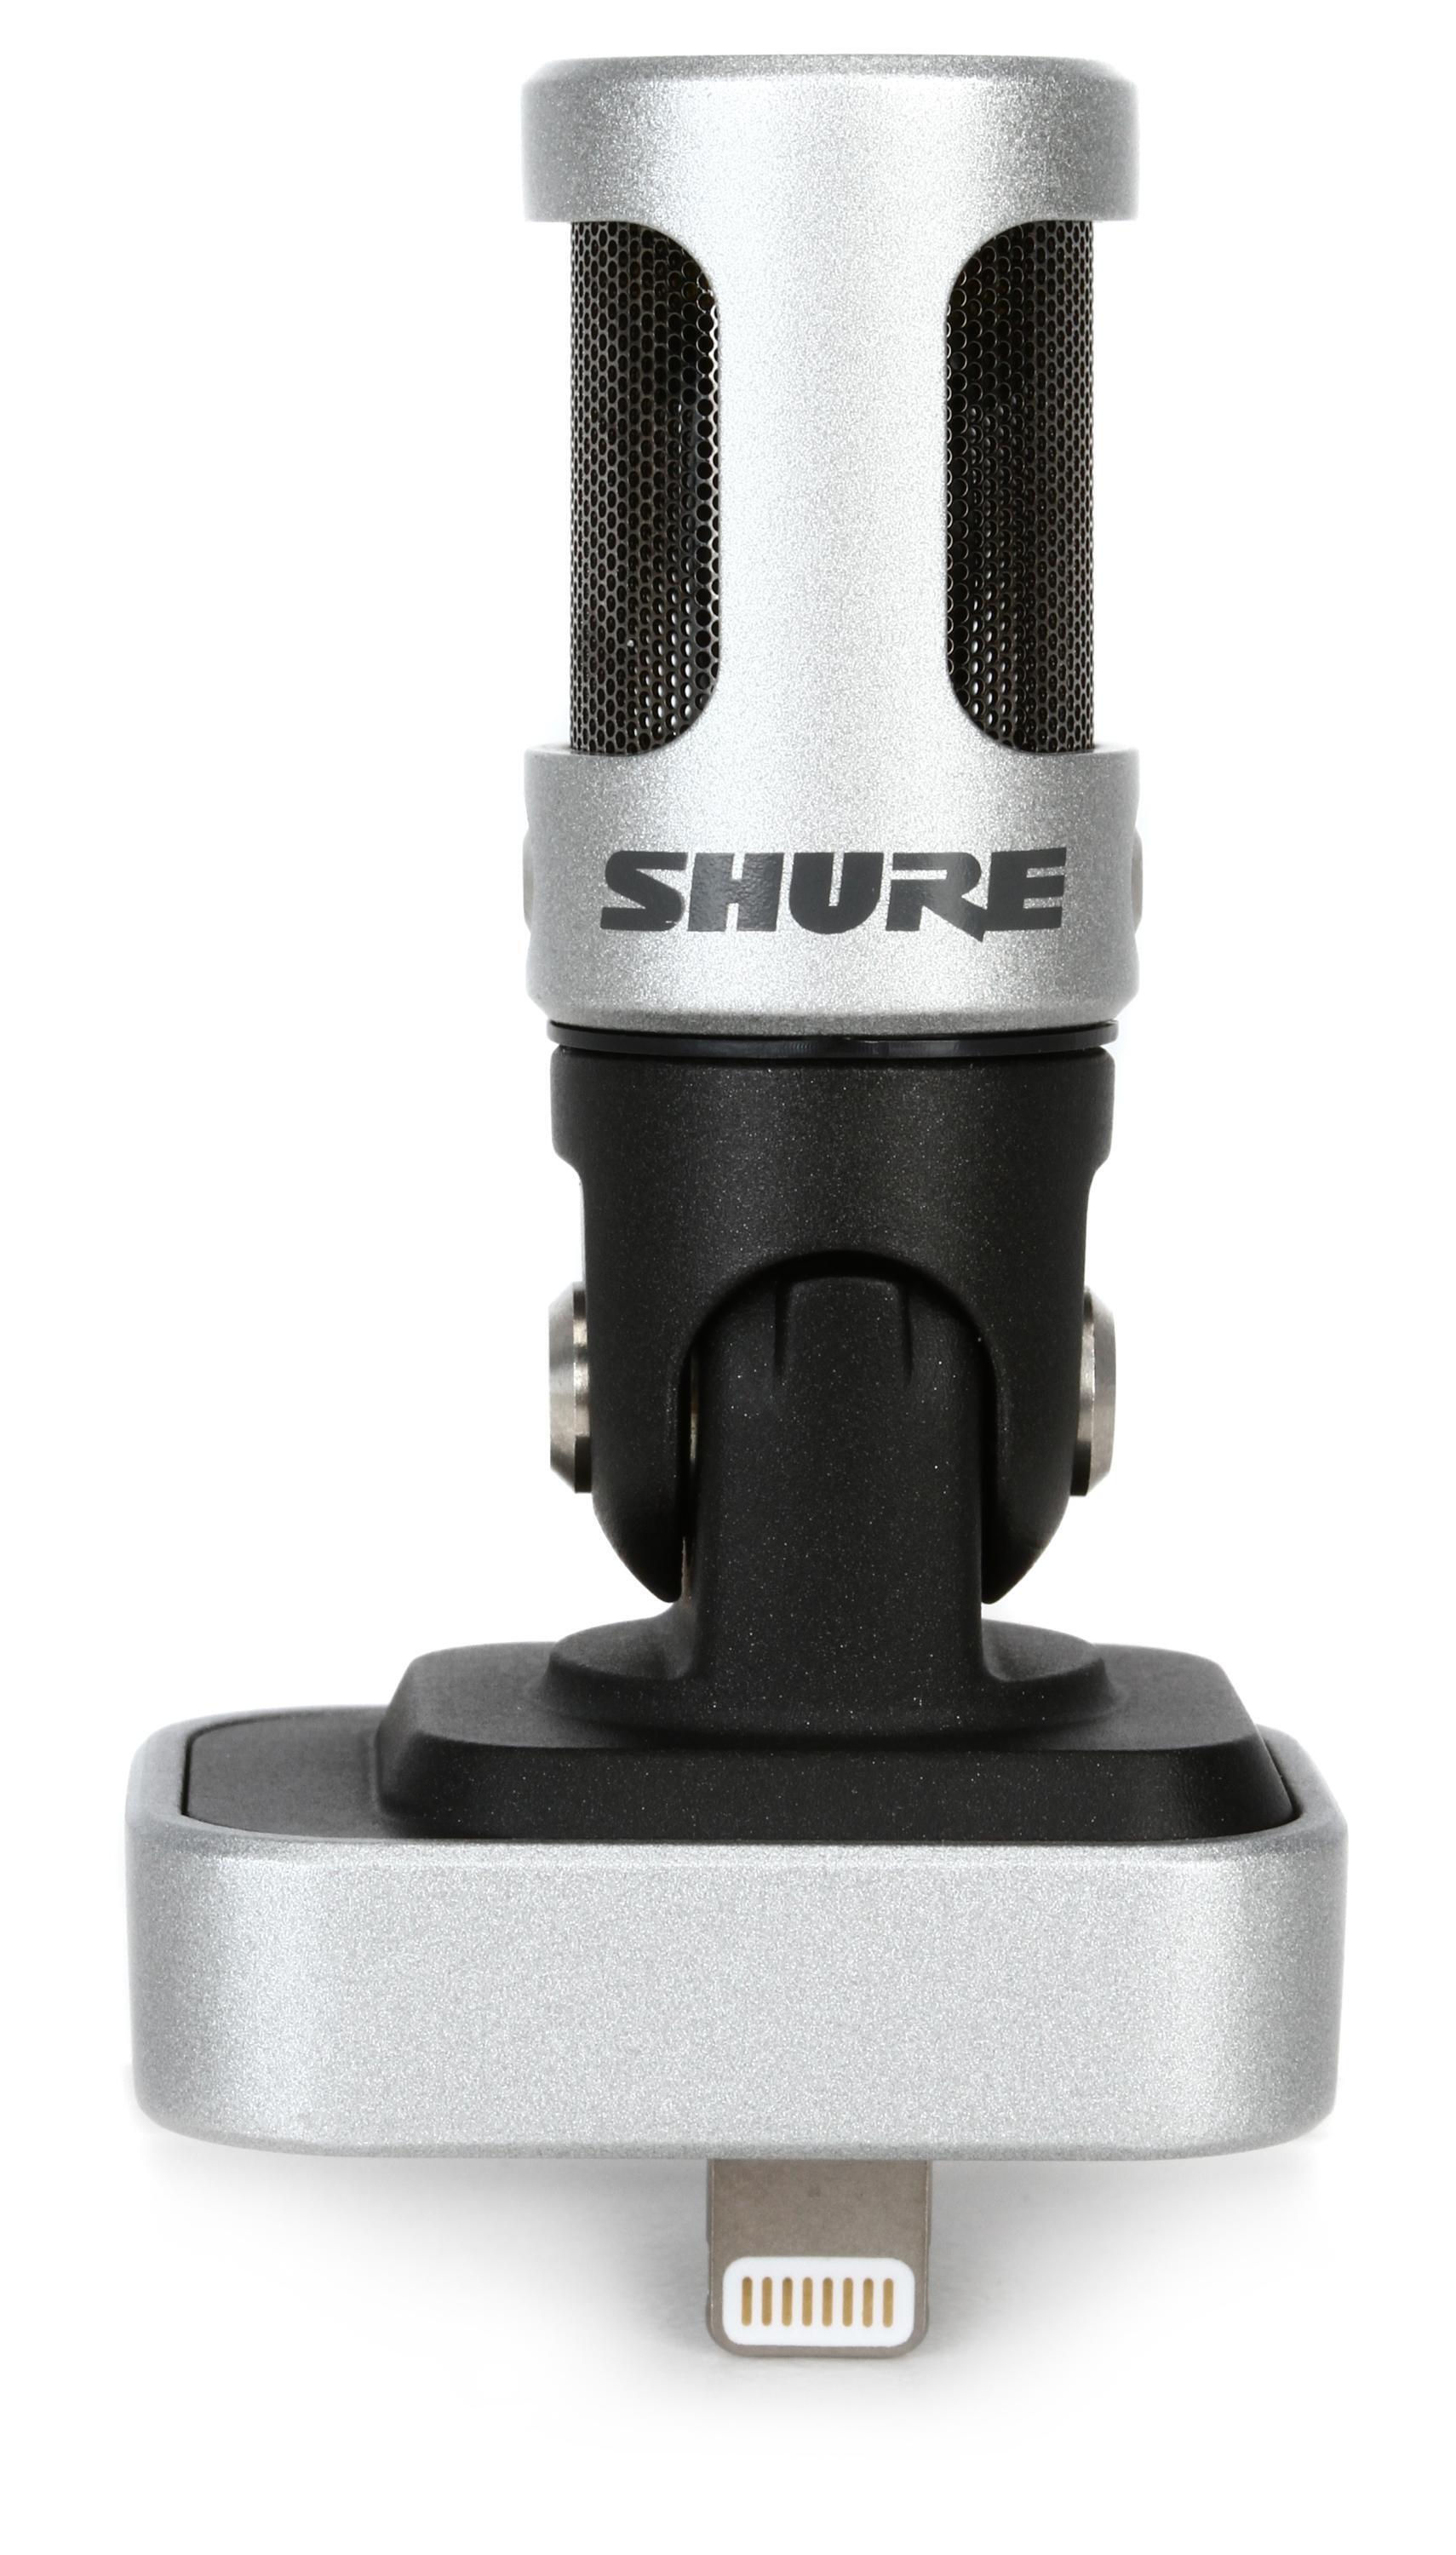 Shure MV88 Digital Stereo Condenser Microphone for iOS Reviews